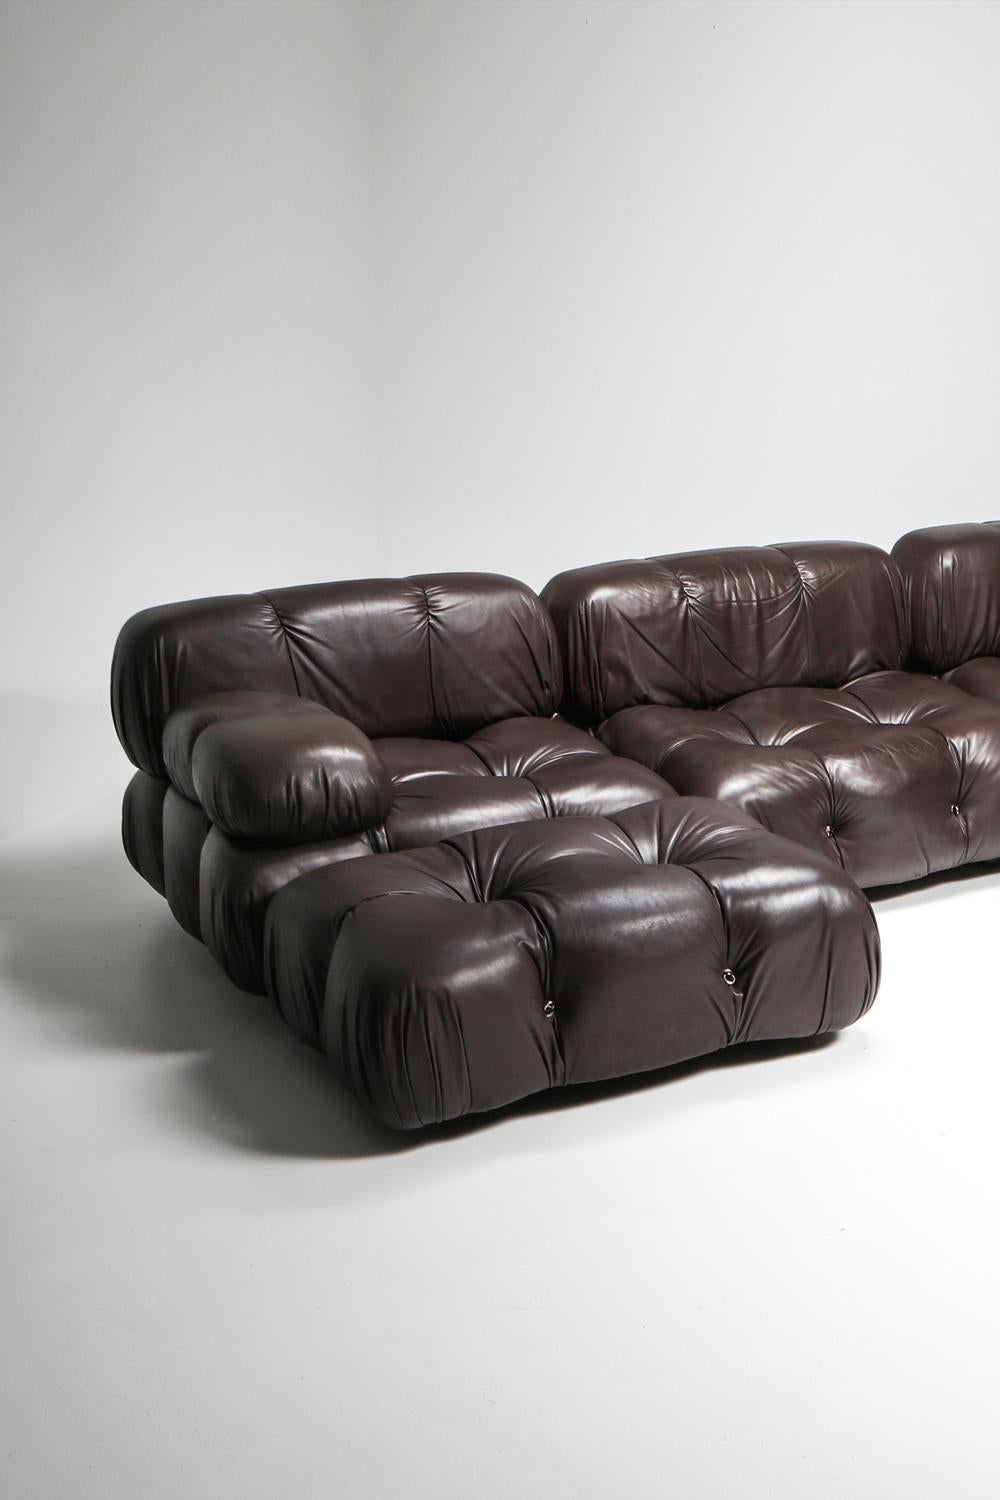 Mario Bellini's Camaleonda Original Sectional Sofa in Chocolate Brown Leather 6